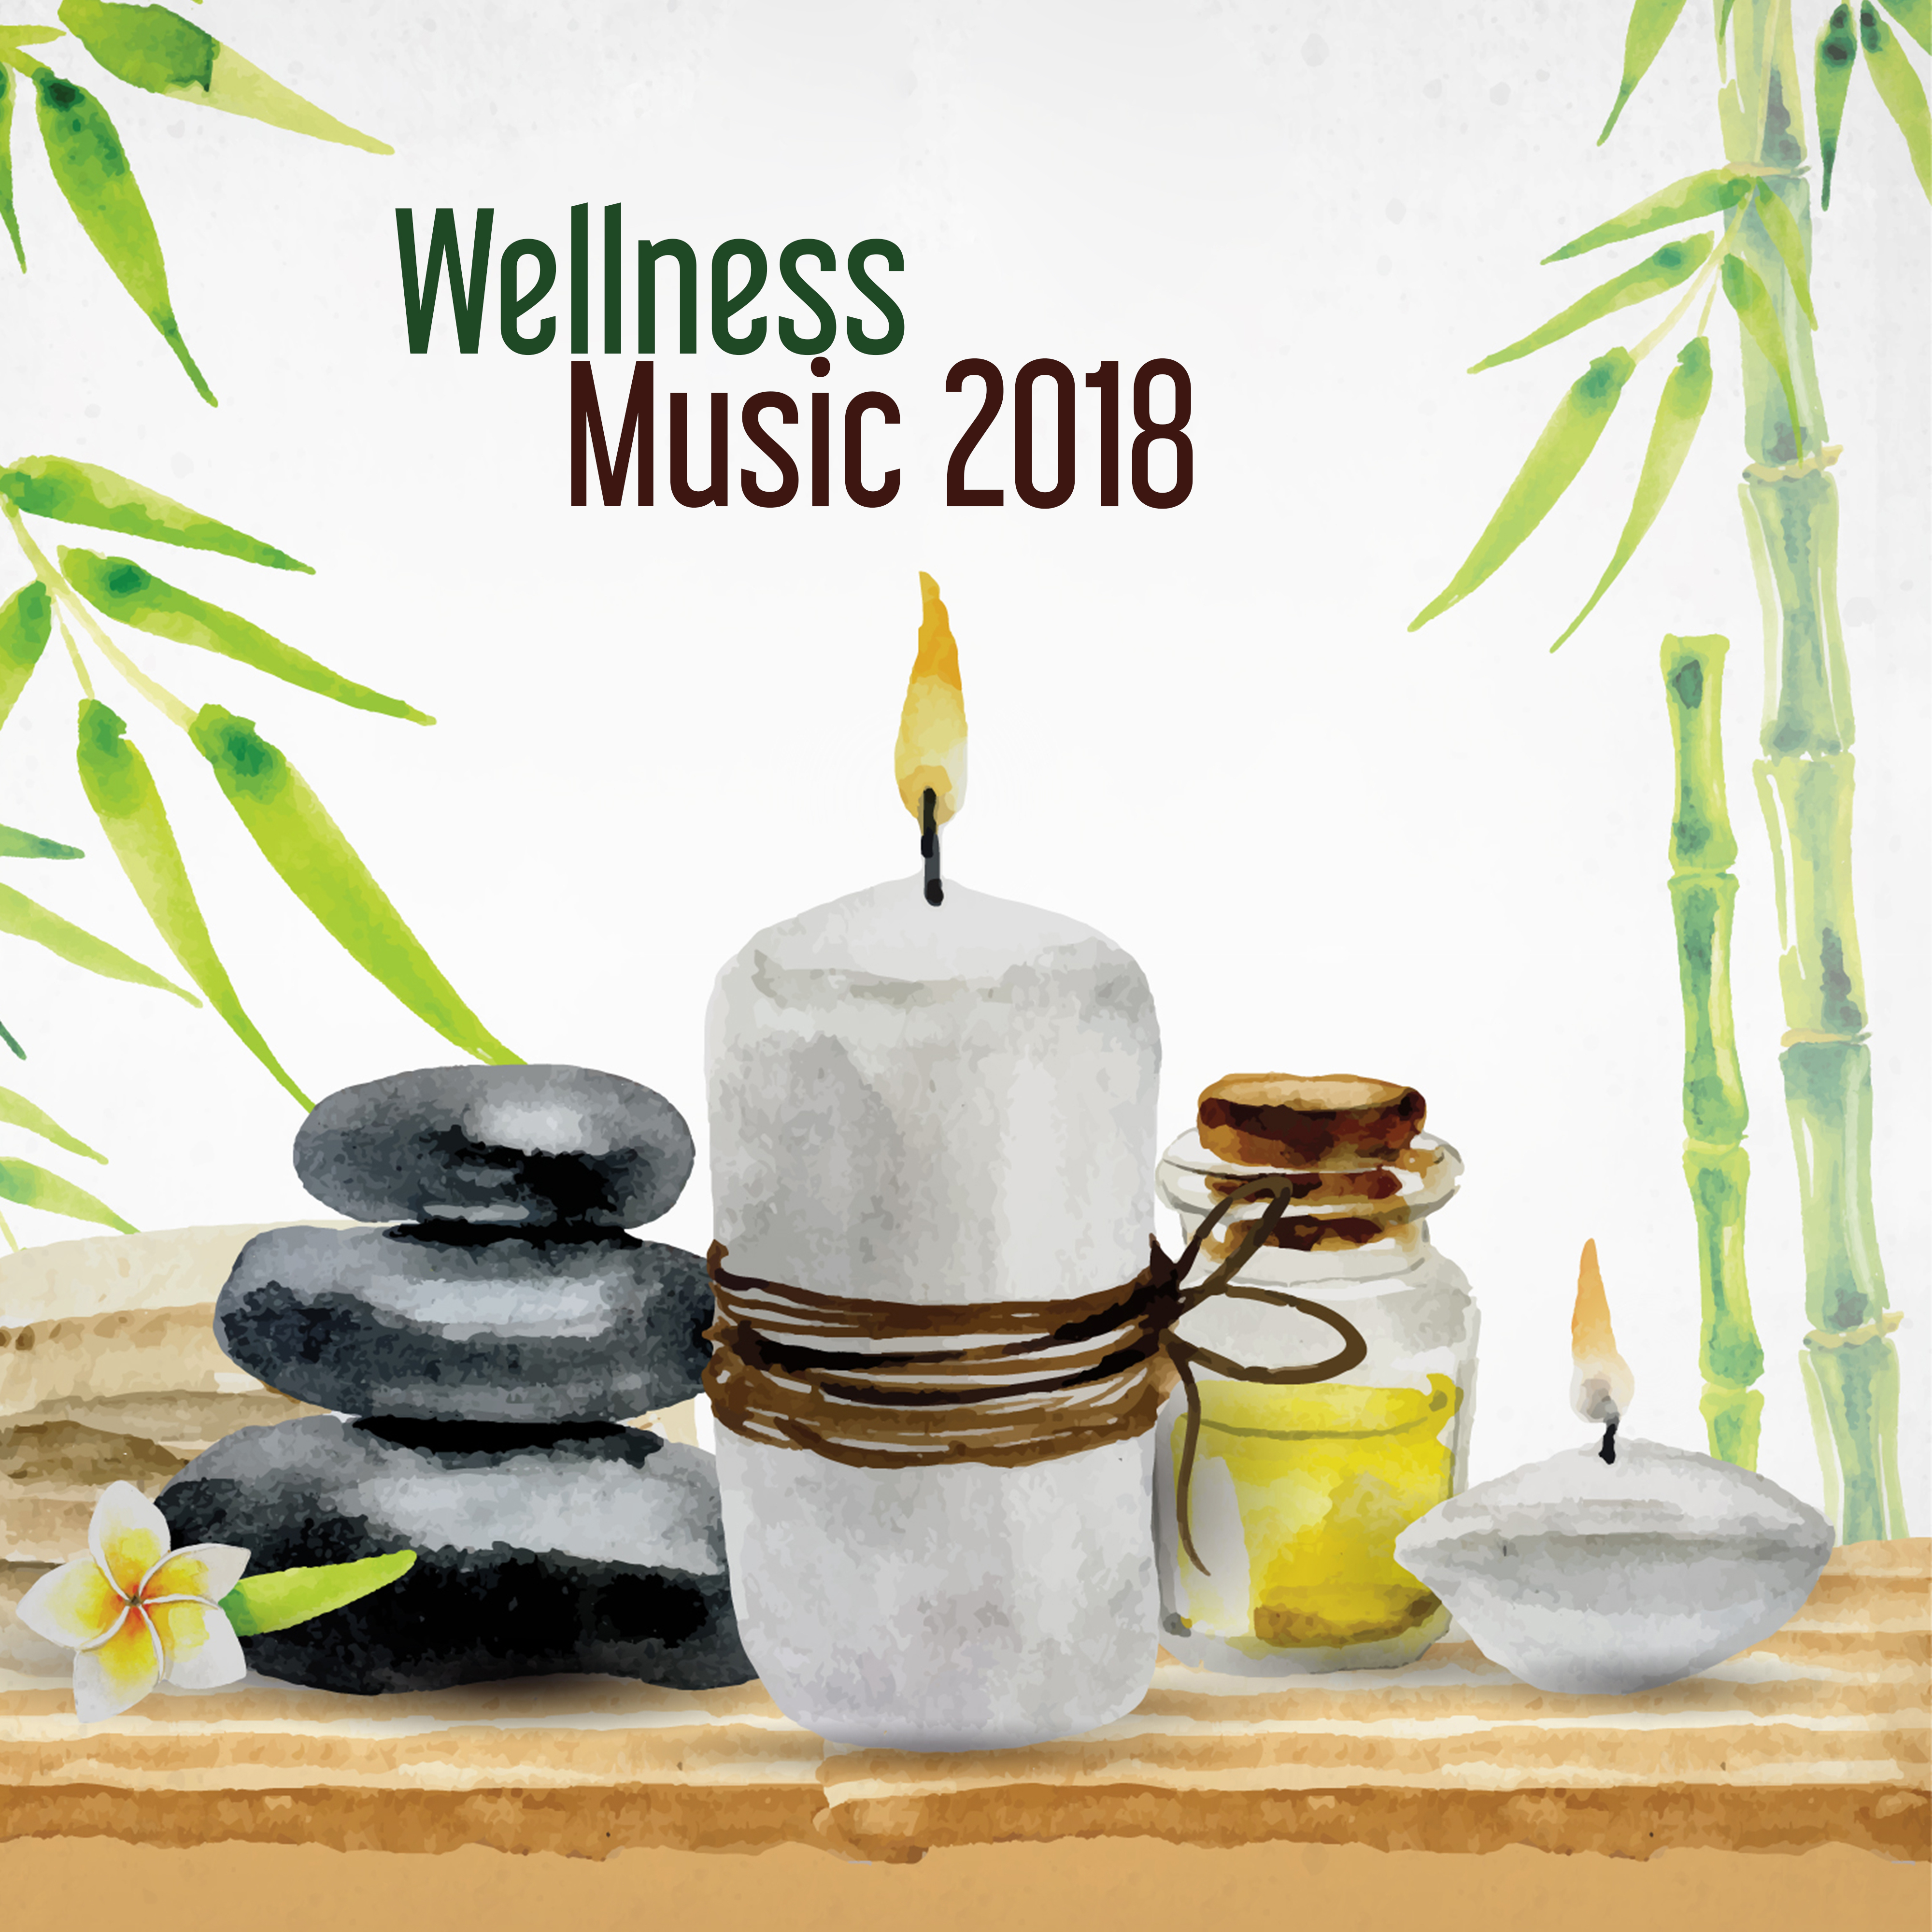 Wellness Music 2018